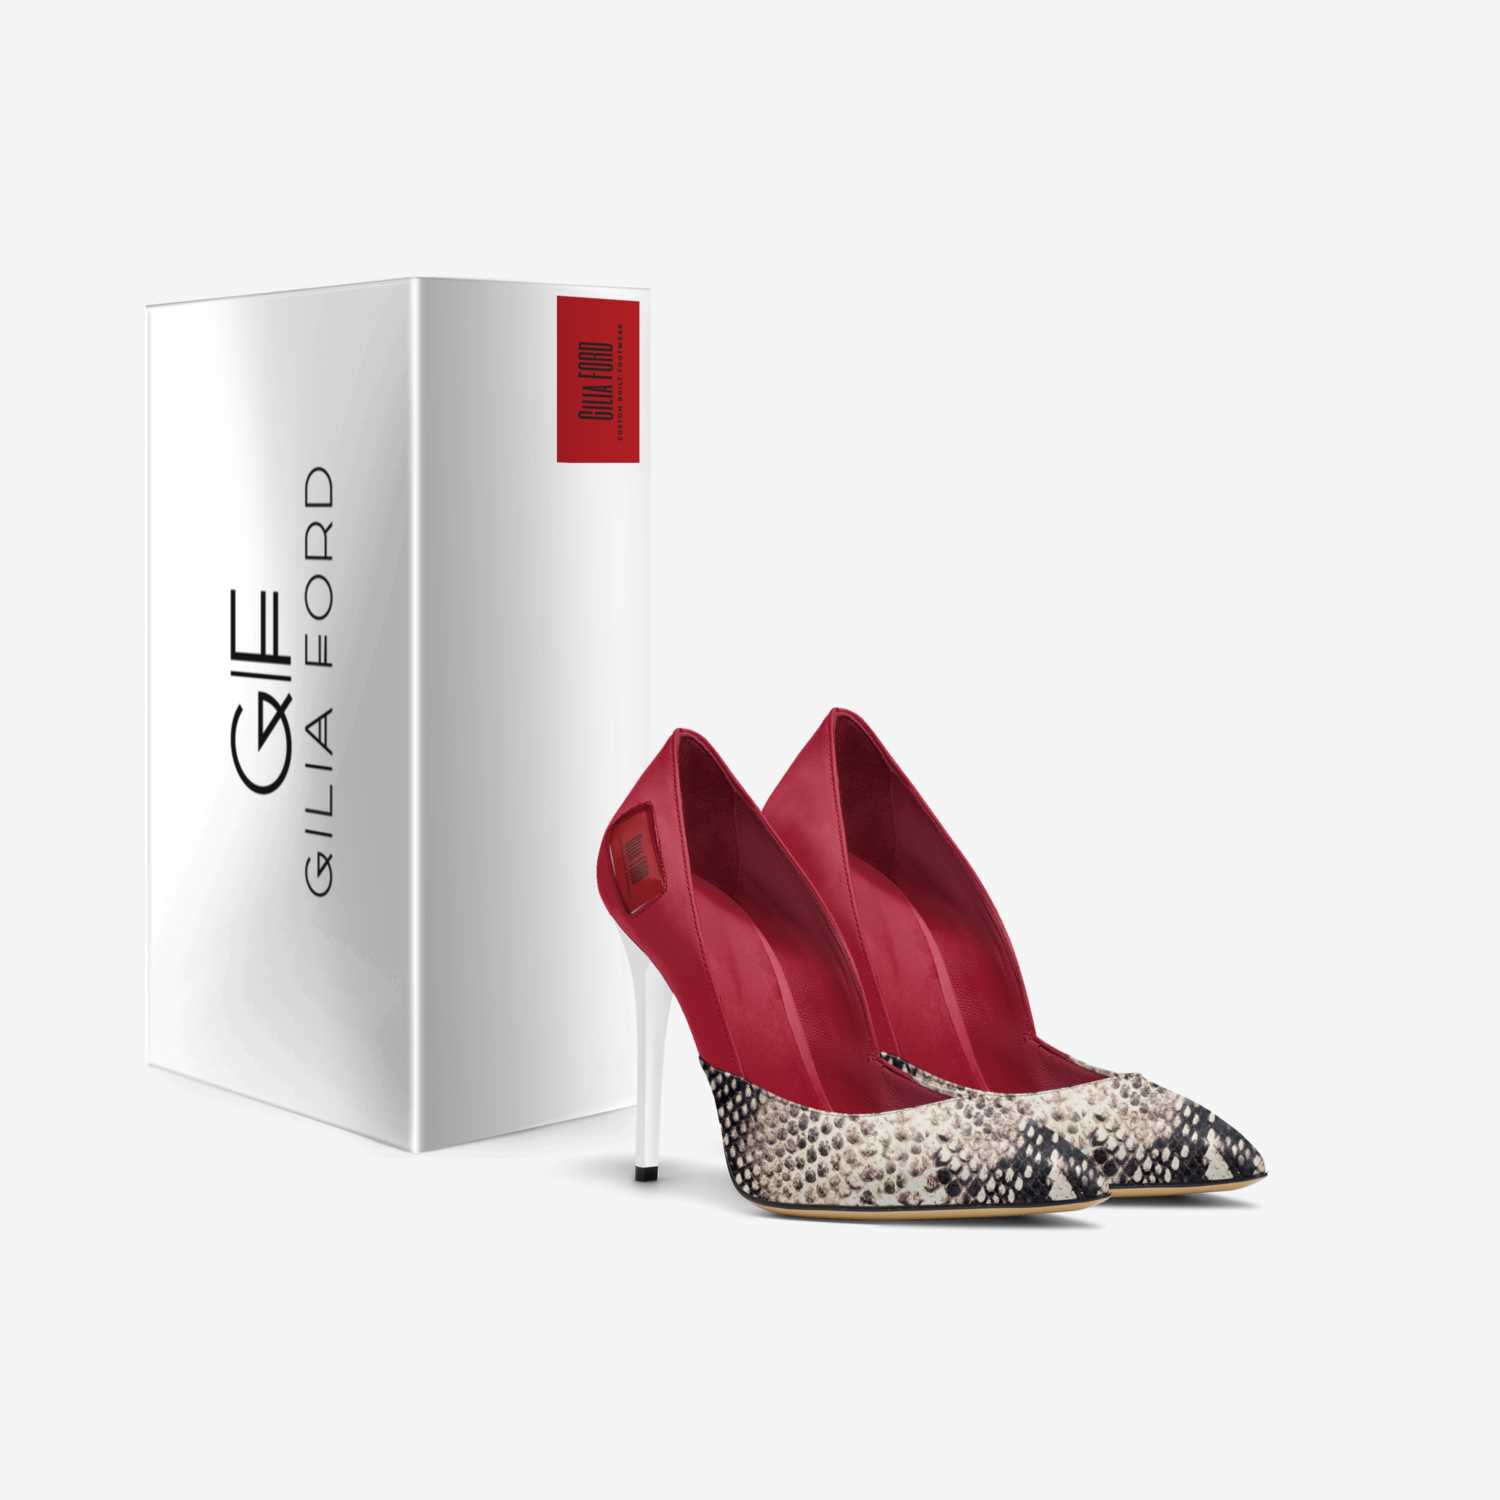 GF custom made in Italy shoes by Lehita Catan Cavery | Box view